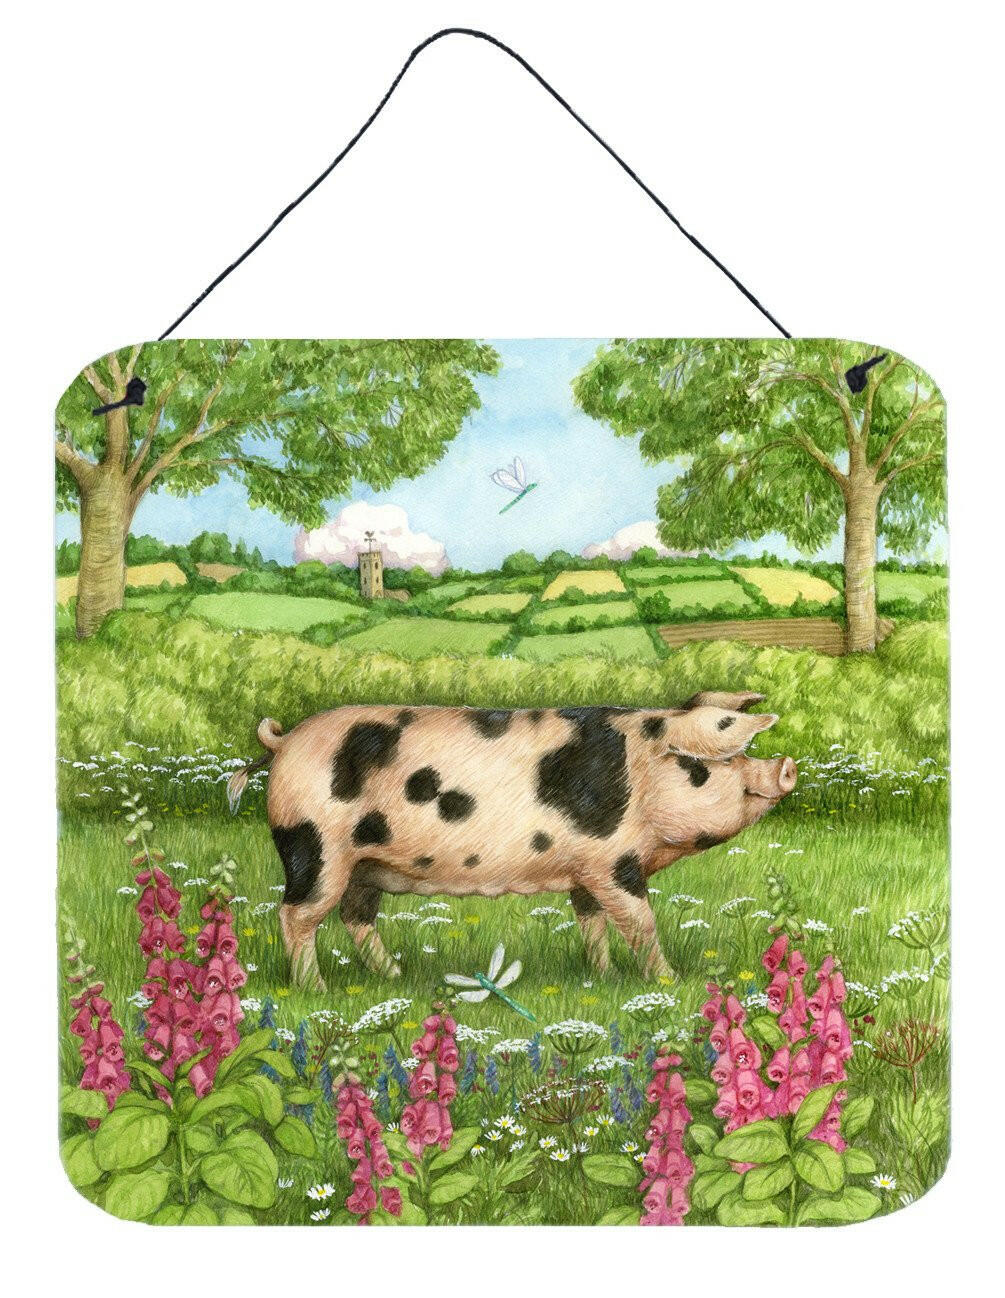 Pigs Meadowsweet by Debbie Cook Wall or Door Hanging Prints CDCO0371DS66 by Caroline's Treasures